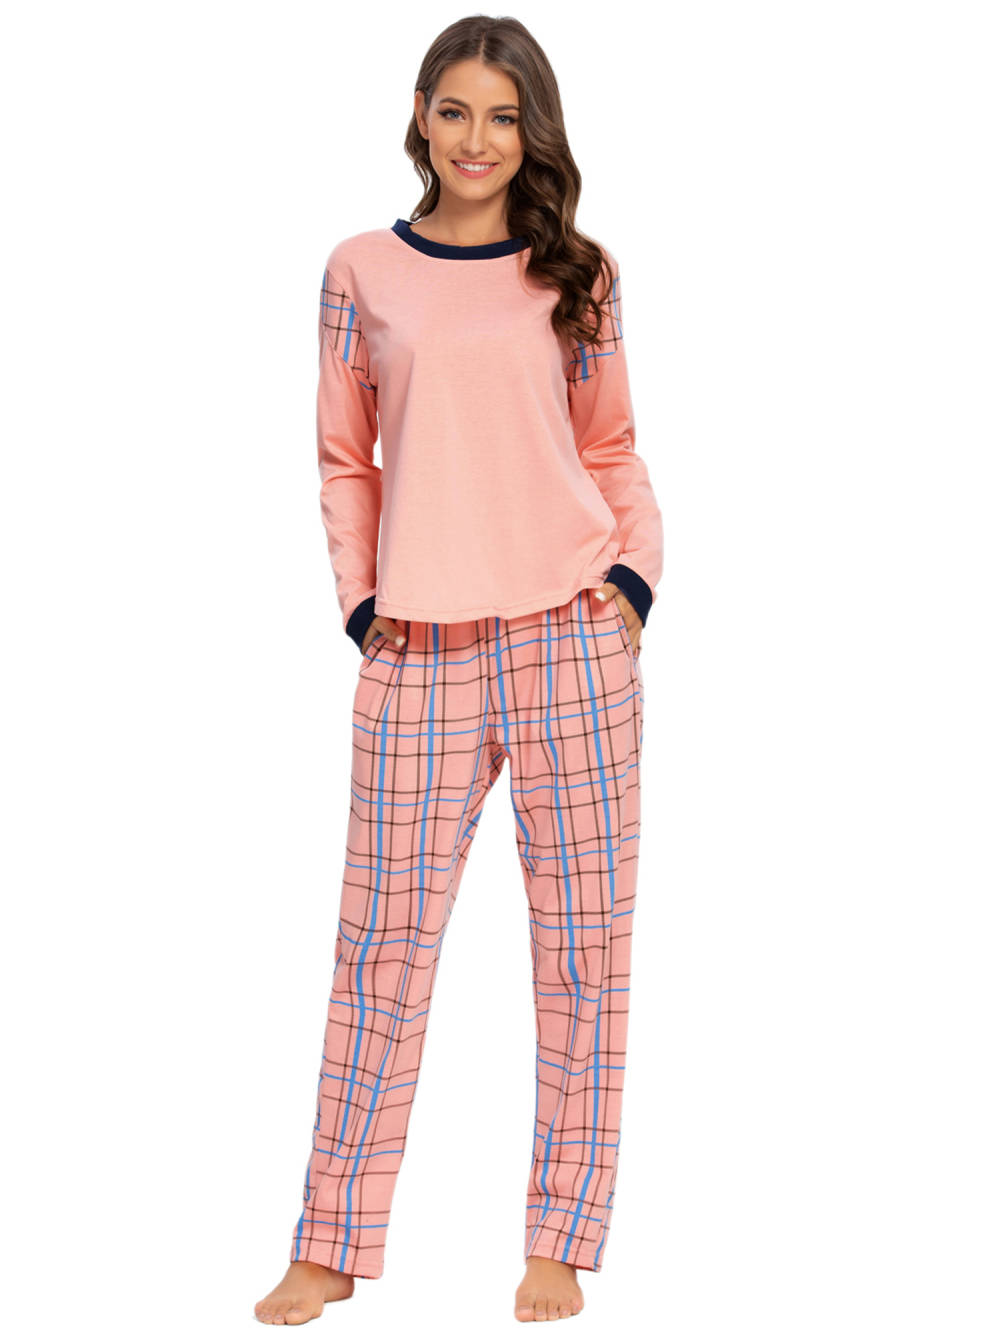 cheibear - Lounge Round Neck with Plaid Pants Pajama Set